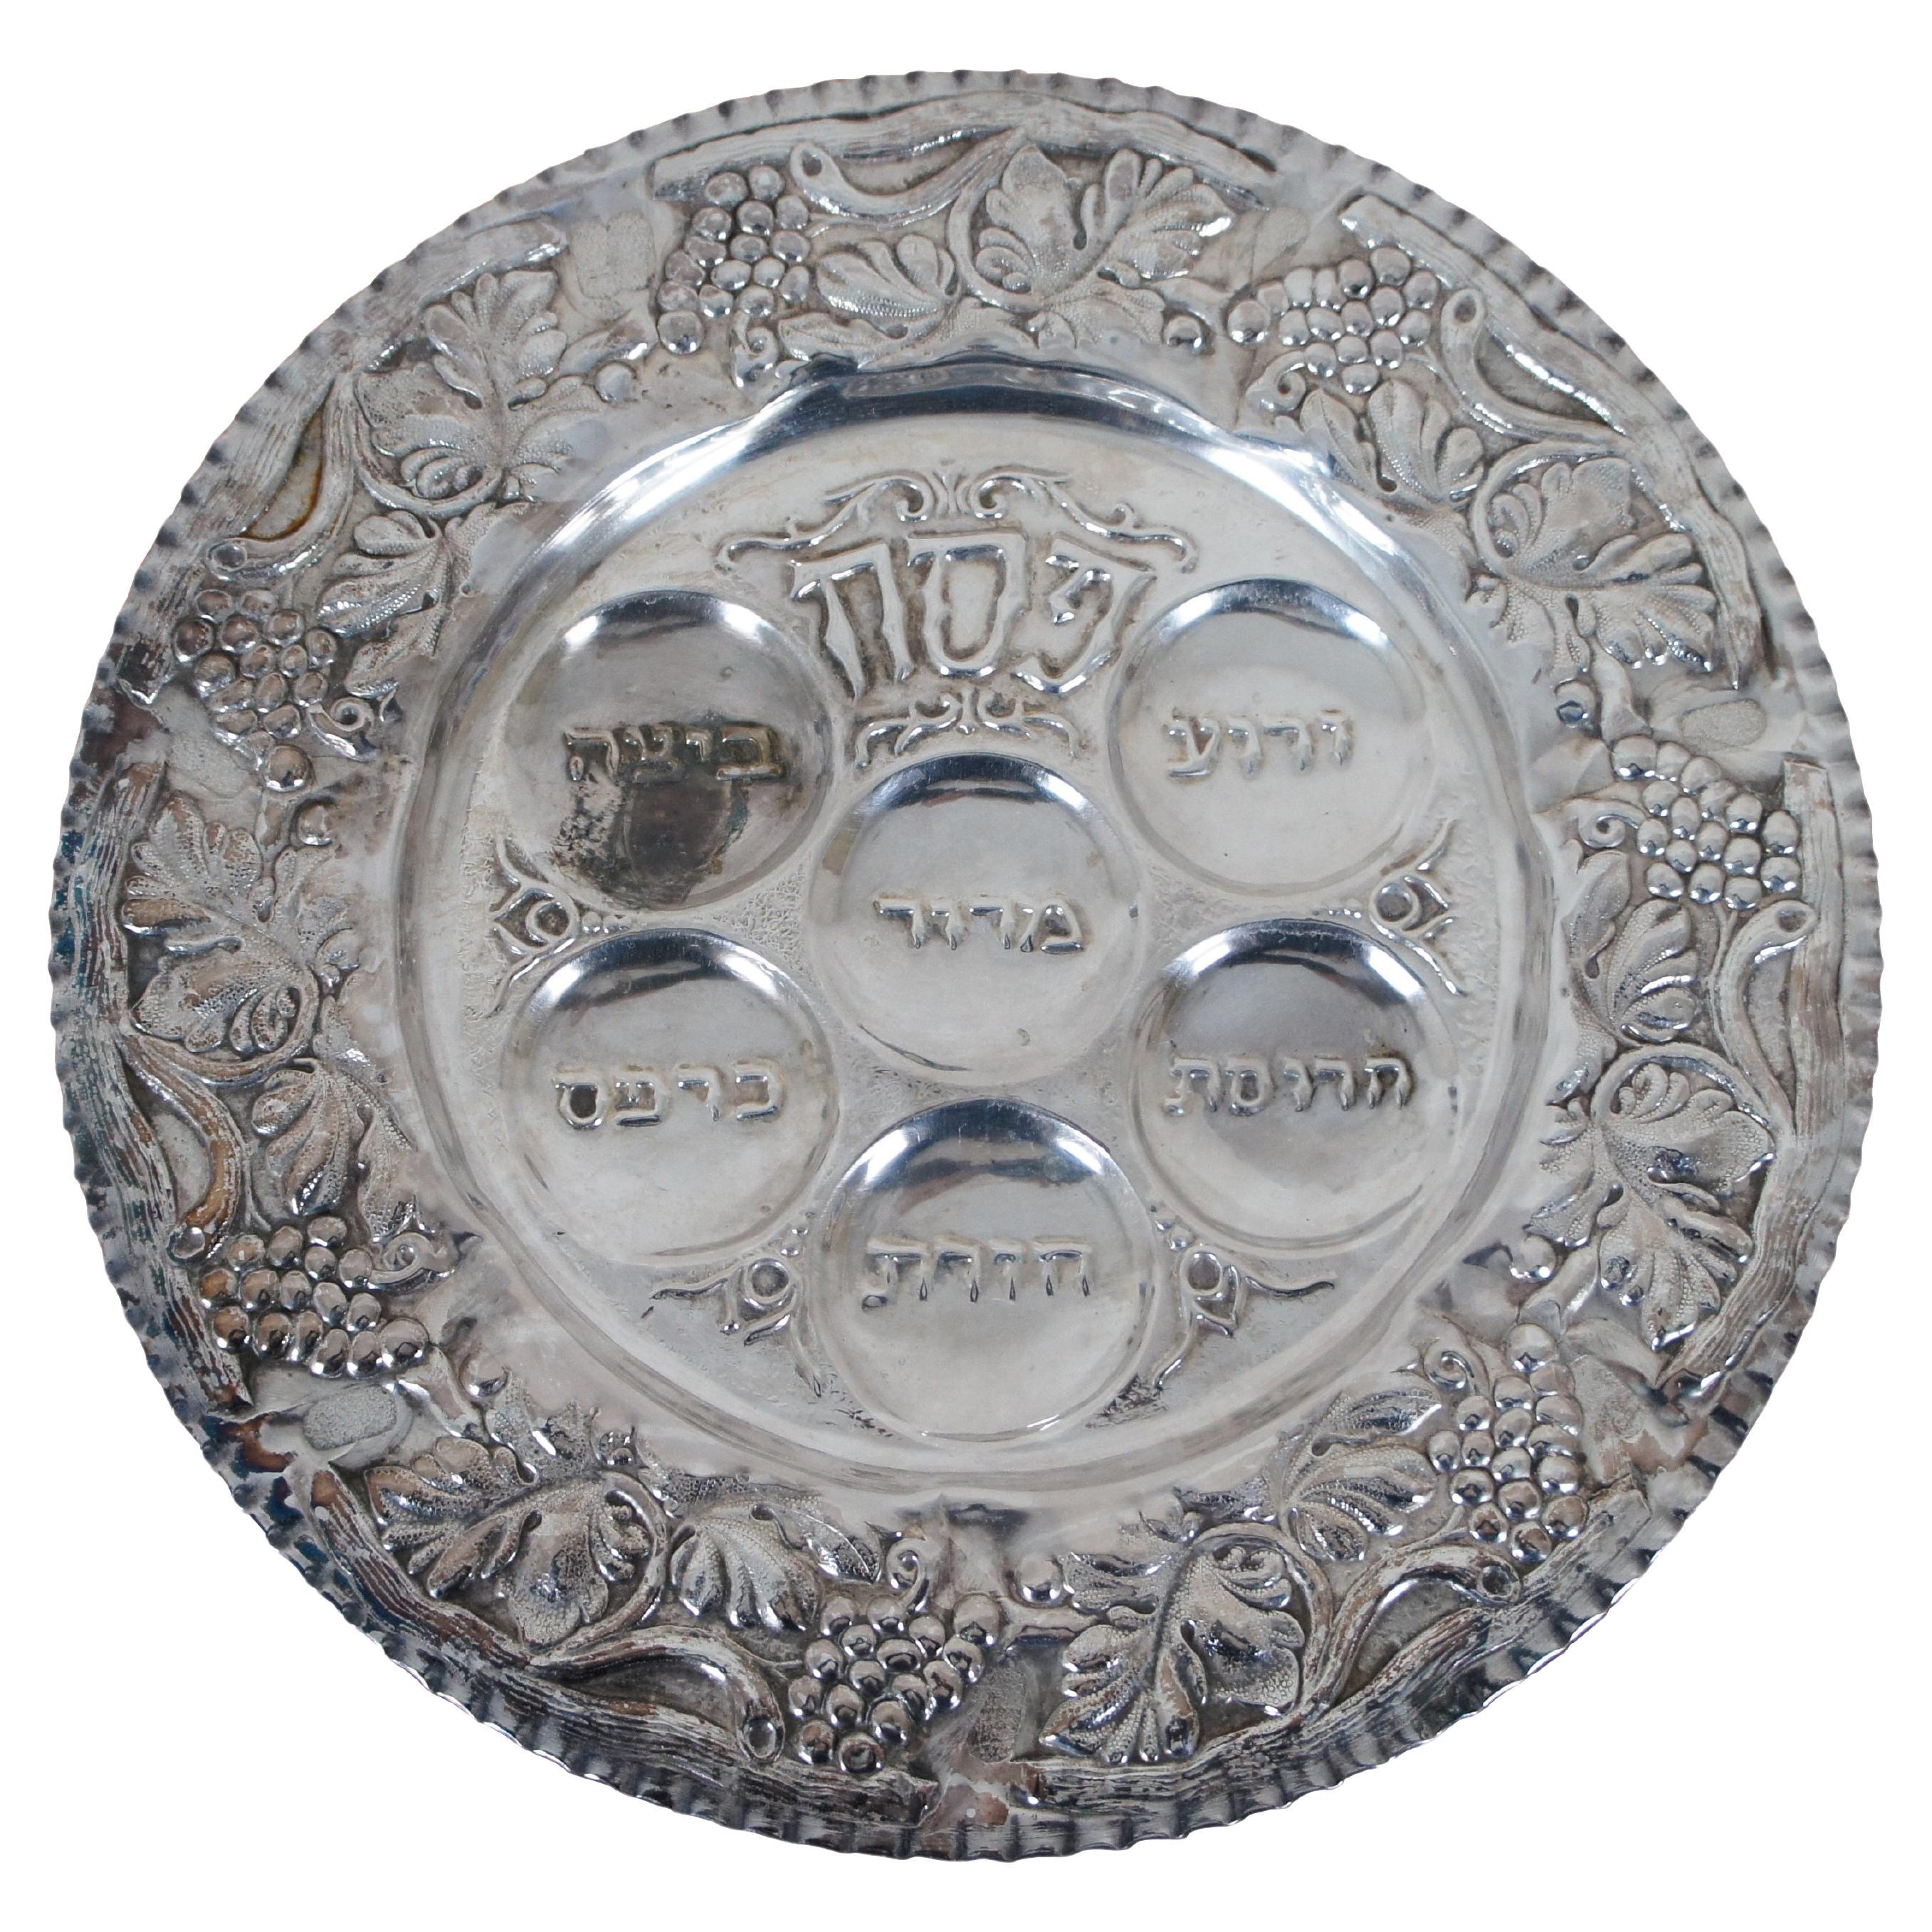 Vintage Silver Plate Passover Pesach Seder Plate Judaica Centerpiece 12"